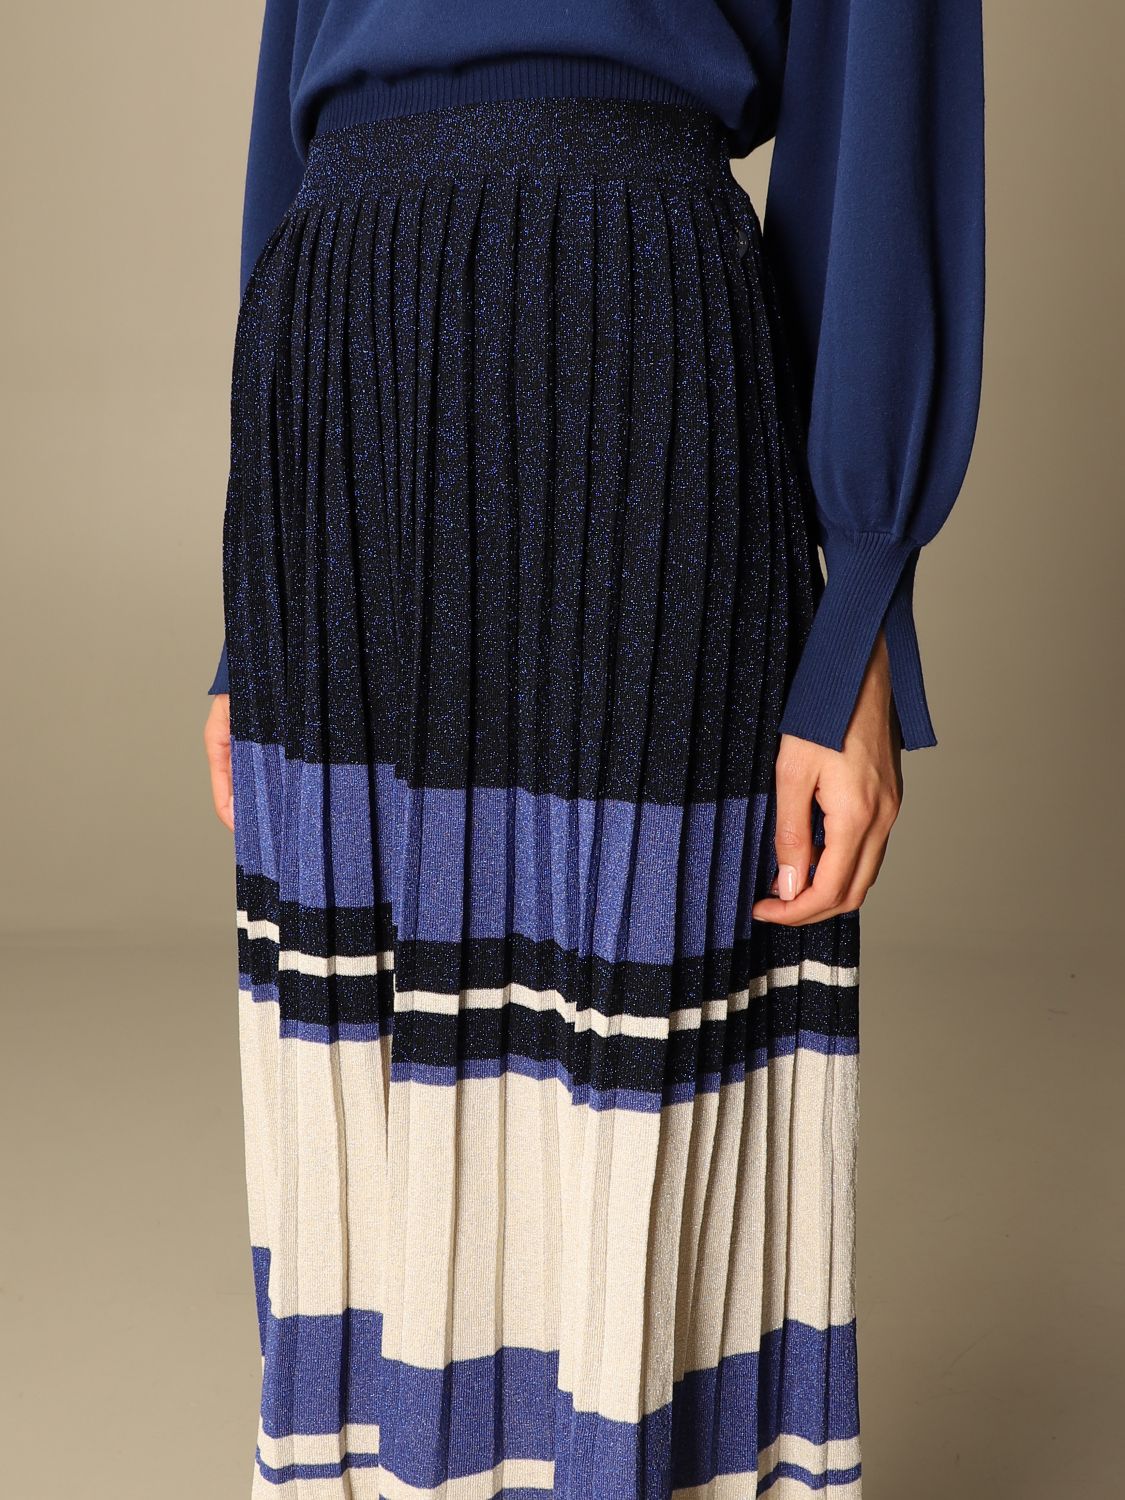 Twinset Twin Set Skirt In Pleated Lurex Knit Blue Twinset Skirt 211tt3221 Online On Gigliocom 